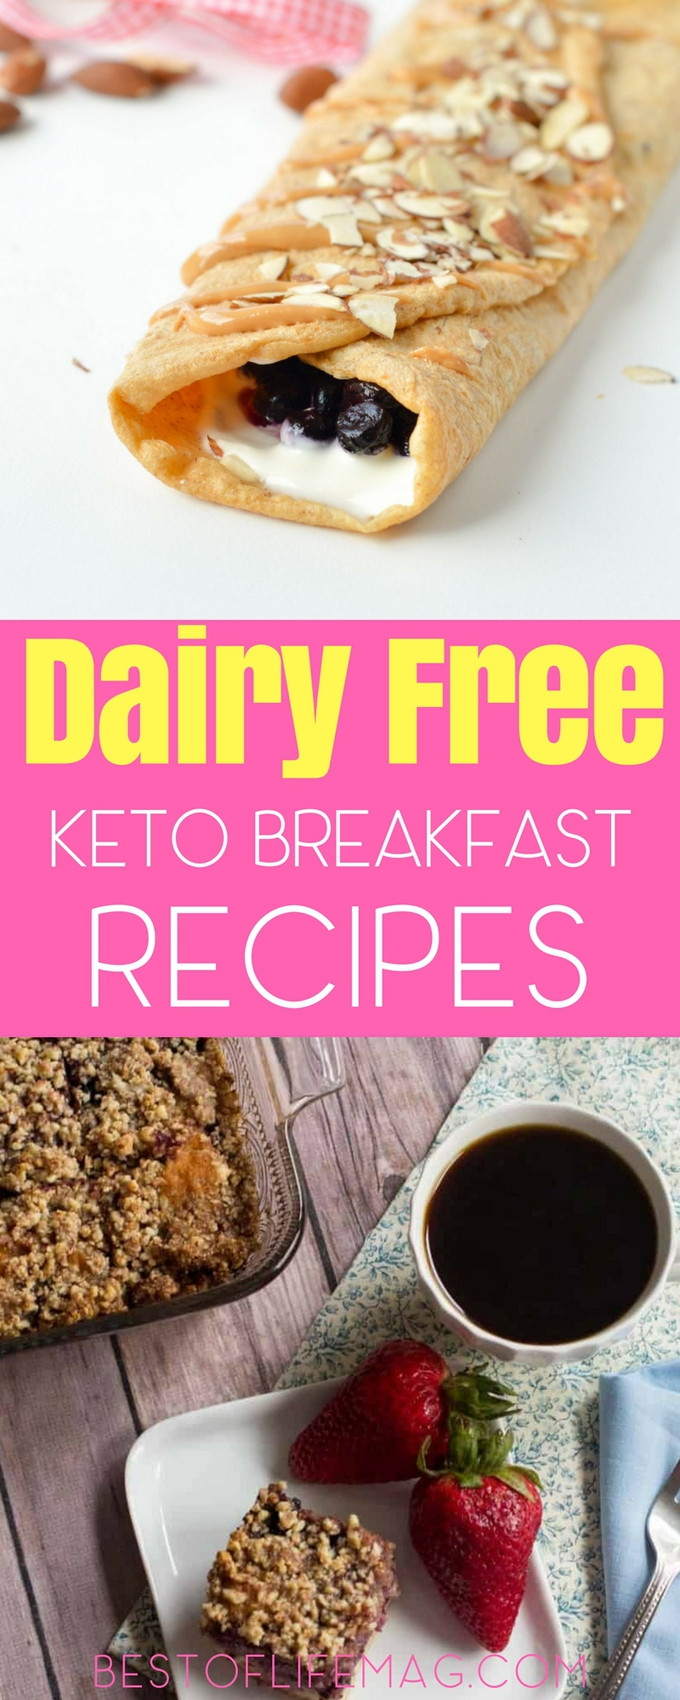 Healthy Dairy Free Breakfast
 Dairy Free Keto Breakfast Recipes Best of Life Magazine